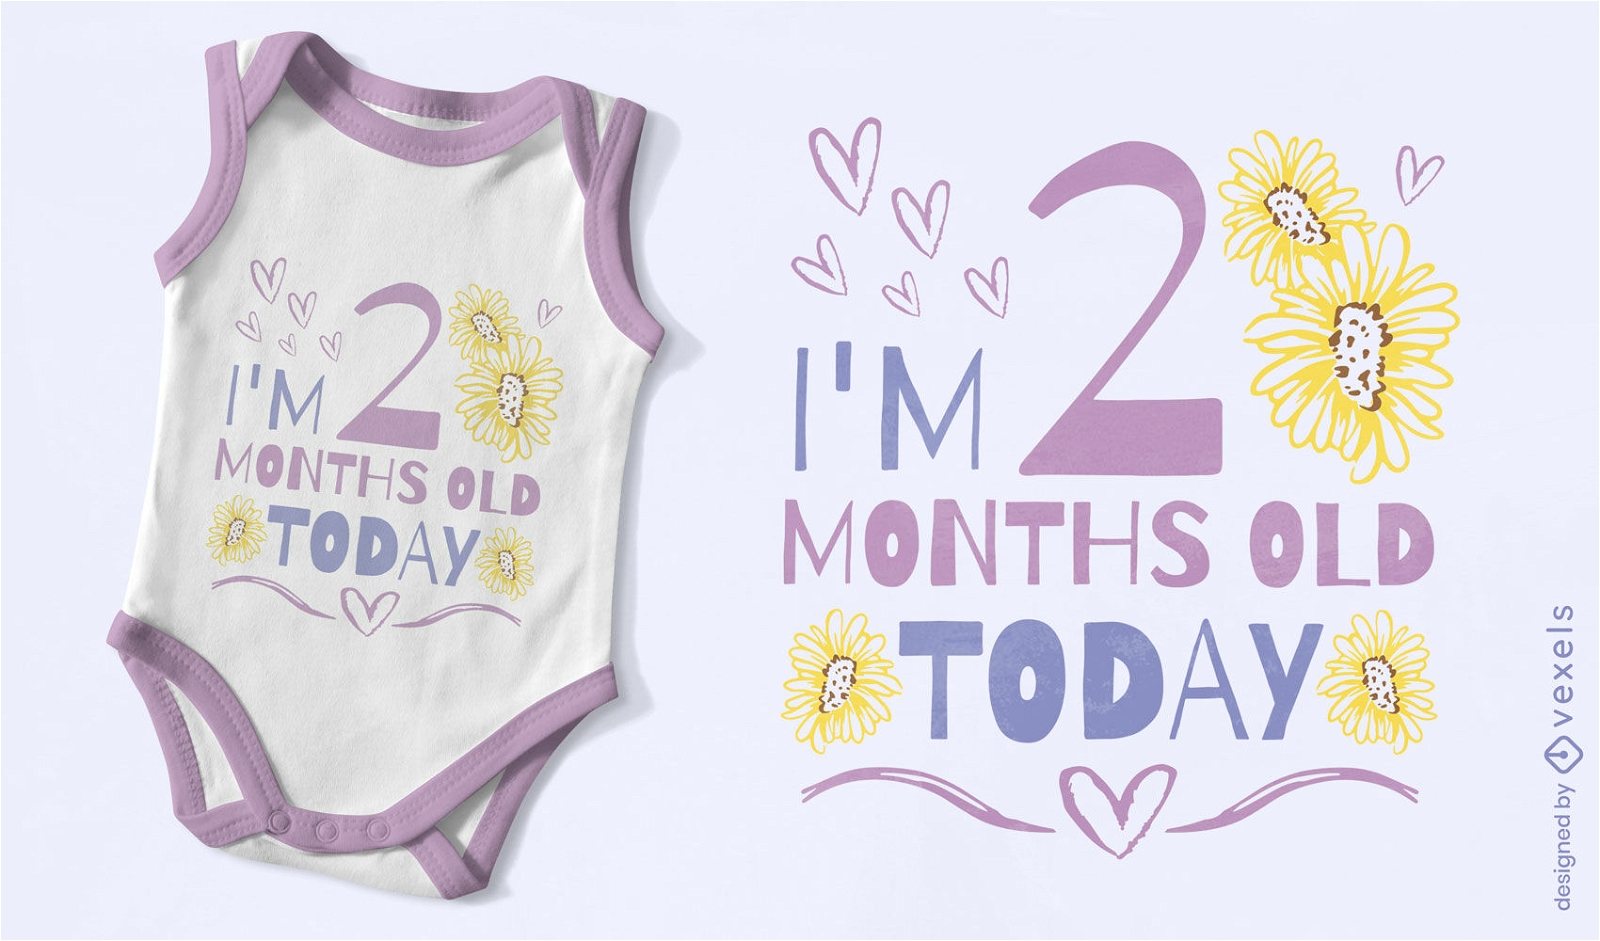 Baby months celebration floral t-shirt design 